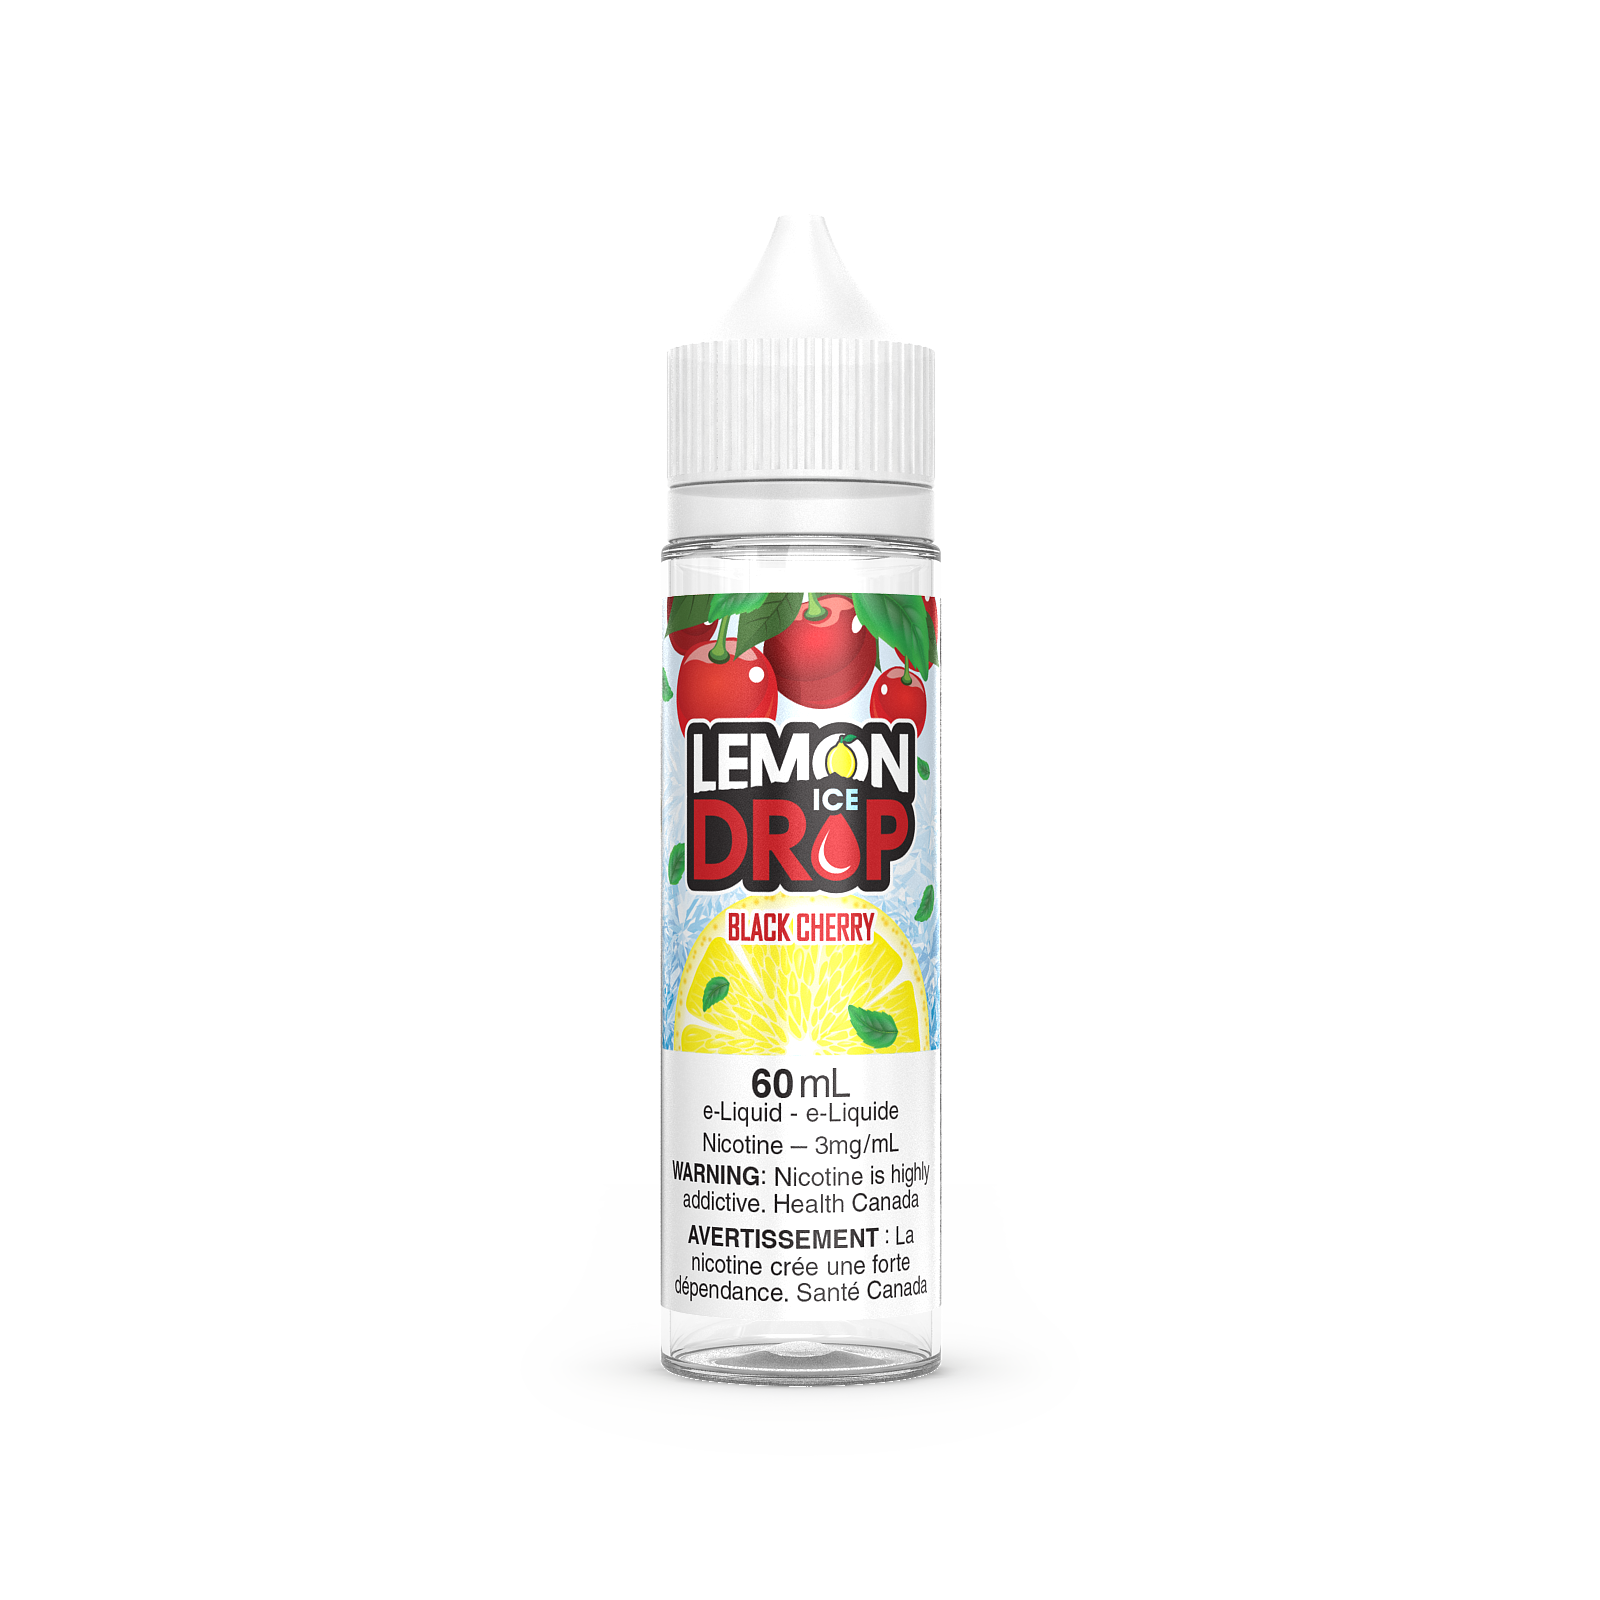 Black Cherry - Lemon Drop ICE - 60ml - FREE BASE - E-Liquid